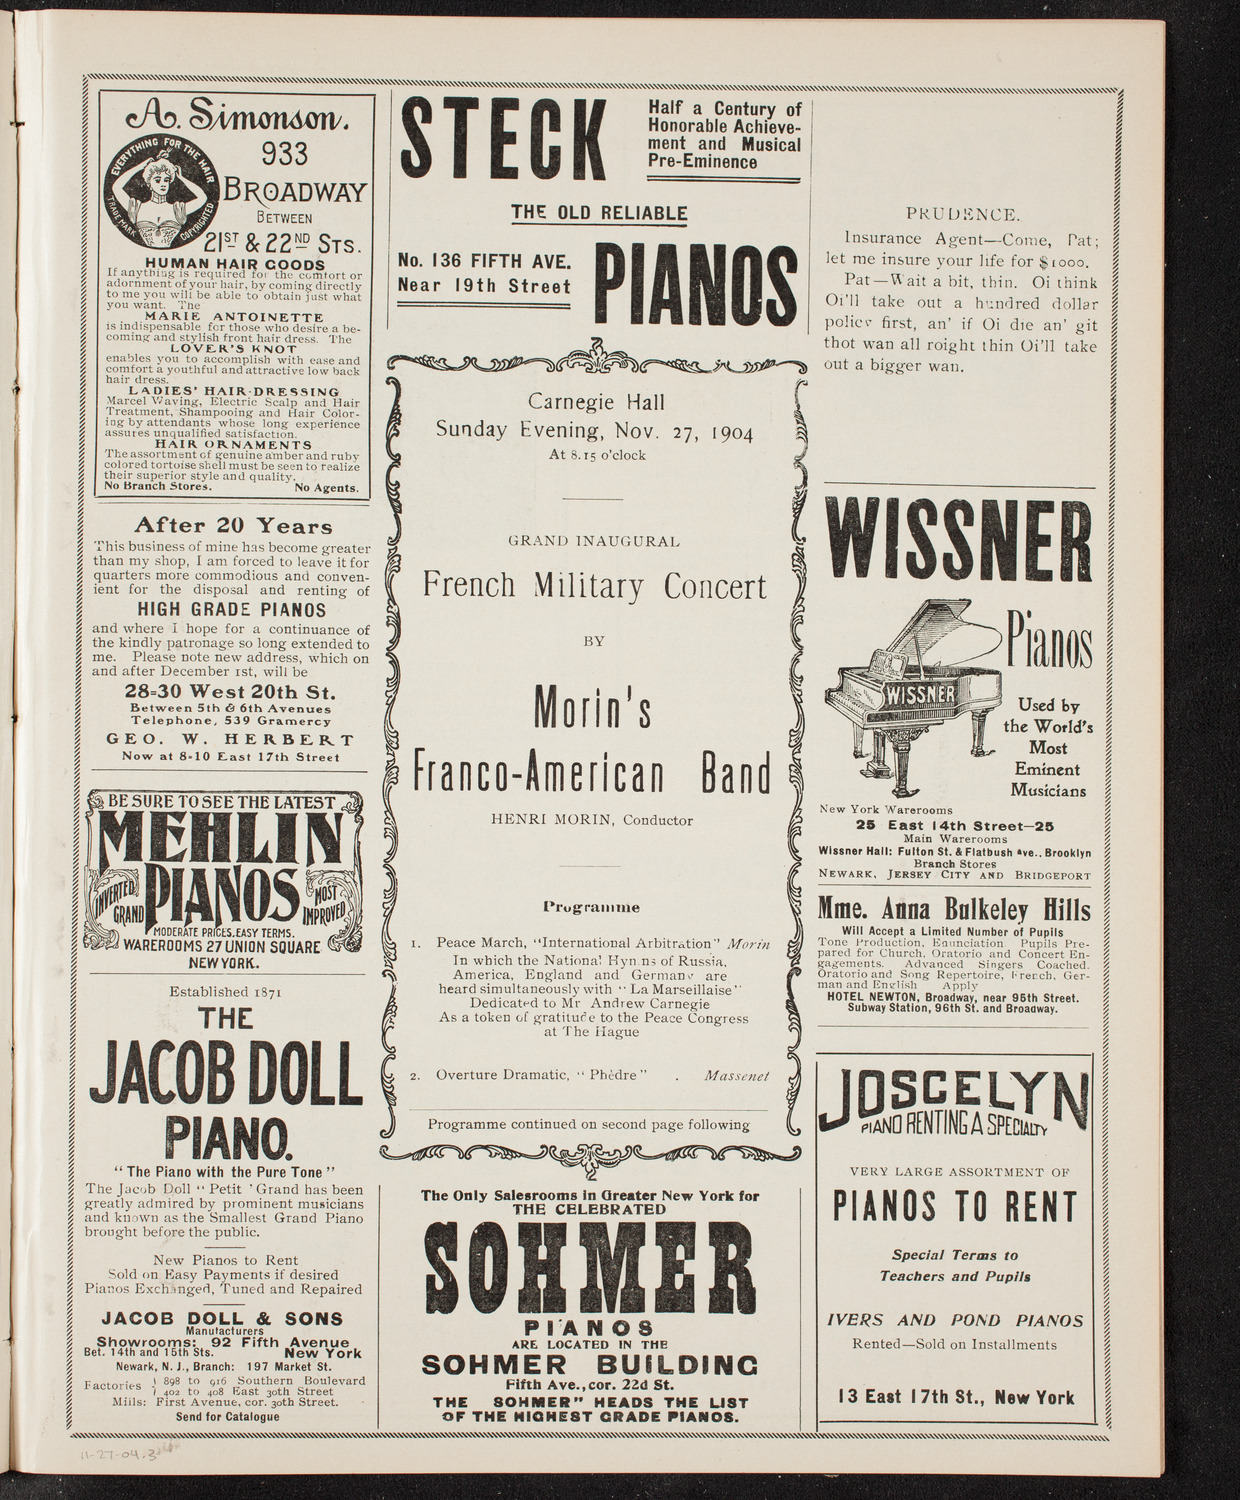 Morin's Franco-American Band, November 27, 1904, program page 5